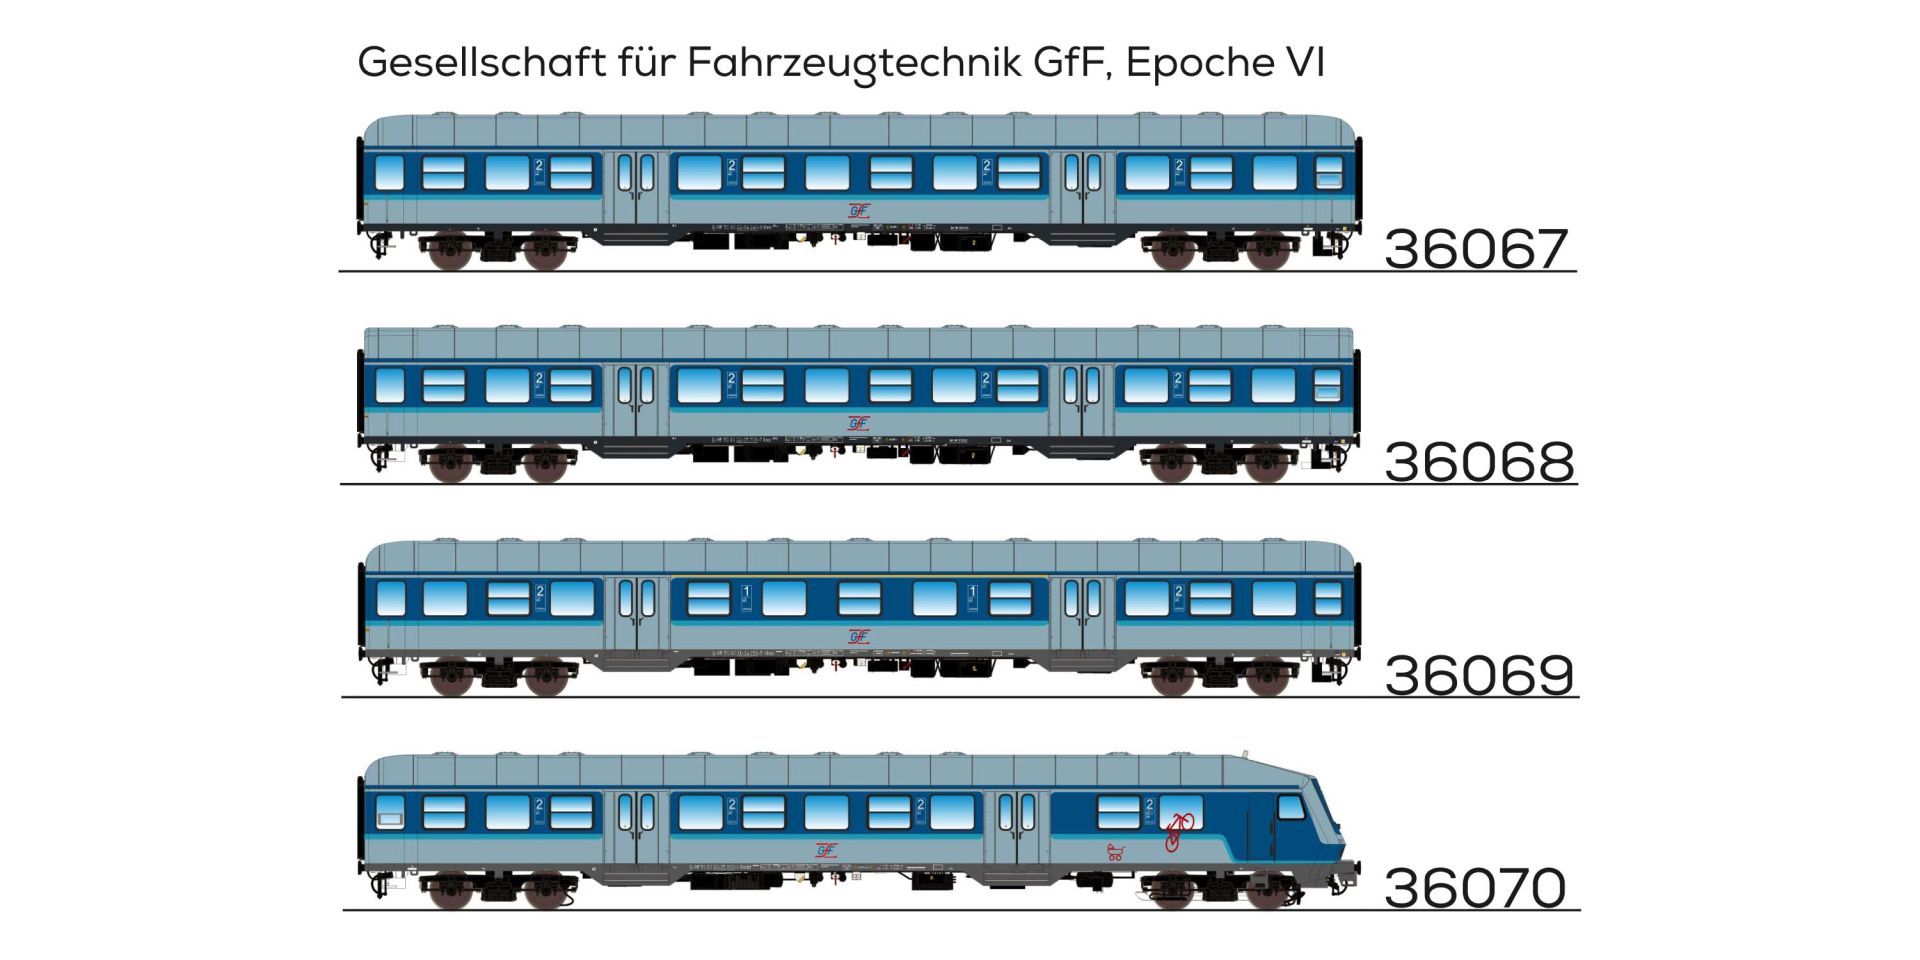 ESU 36068 - Personenwagen 'Silberling', Bnrz 450.3, 80 22-35 706-7, GfF, Ep.VI